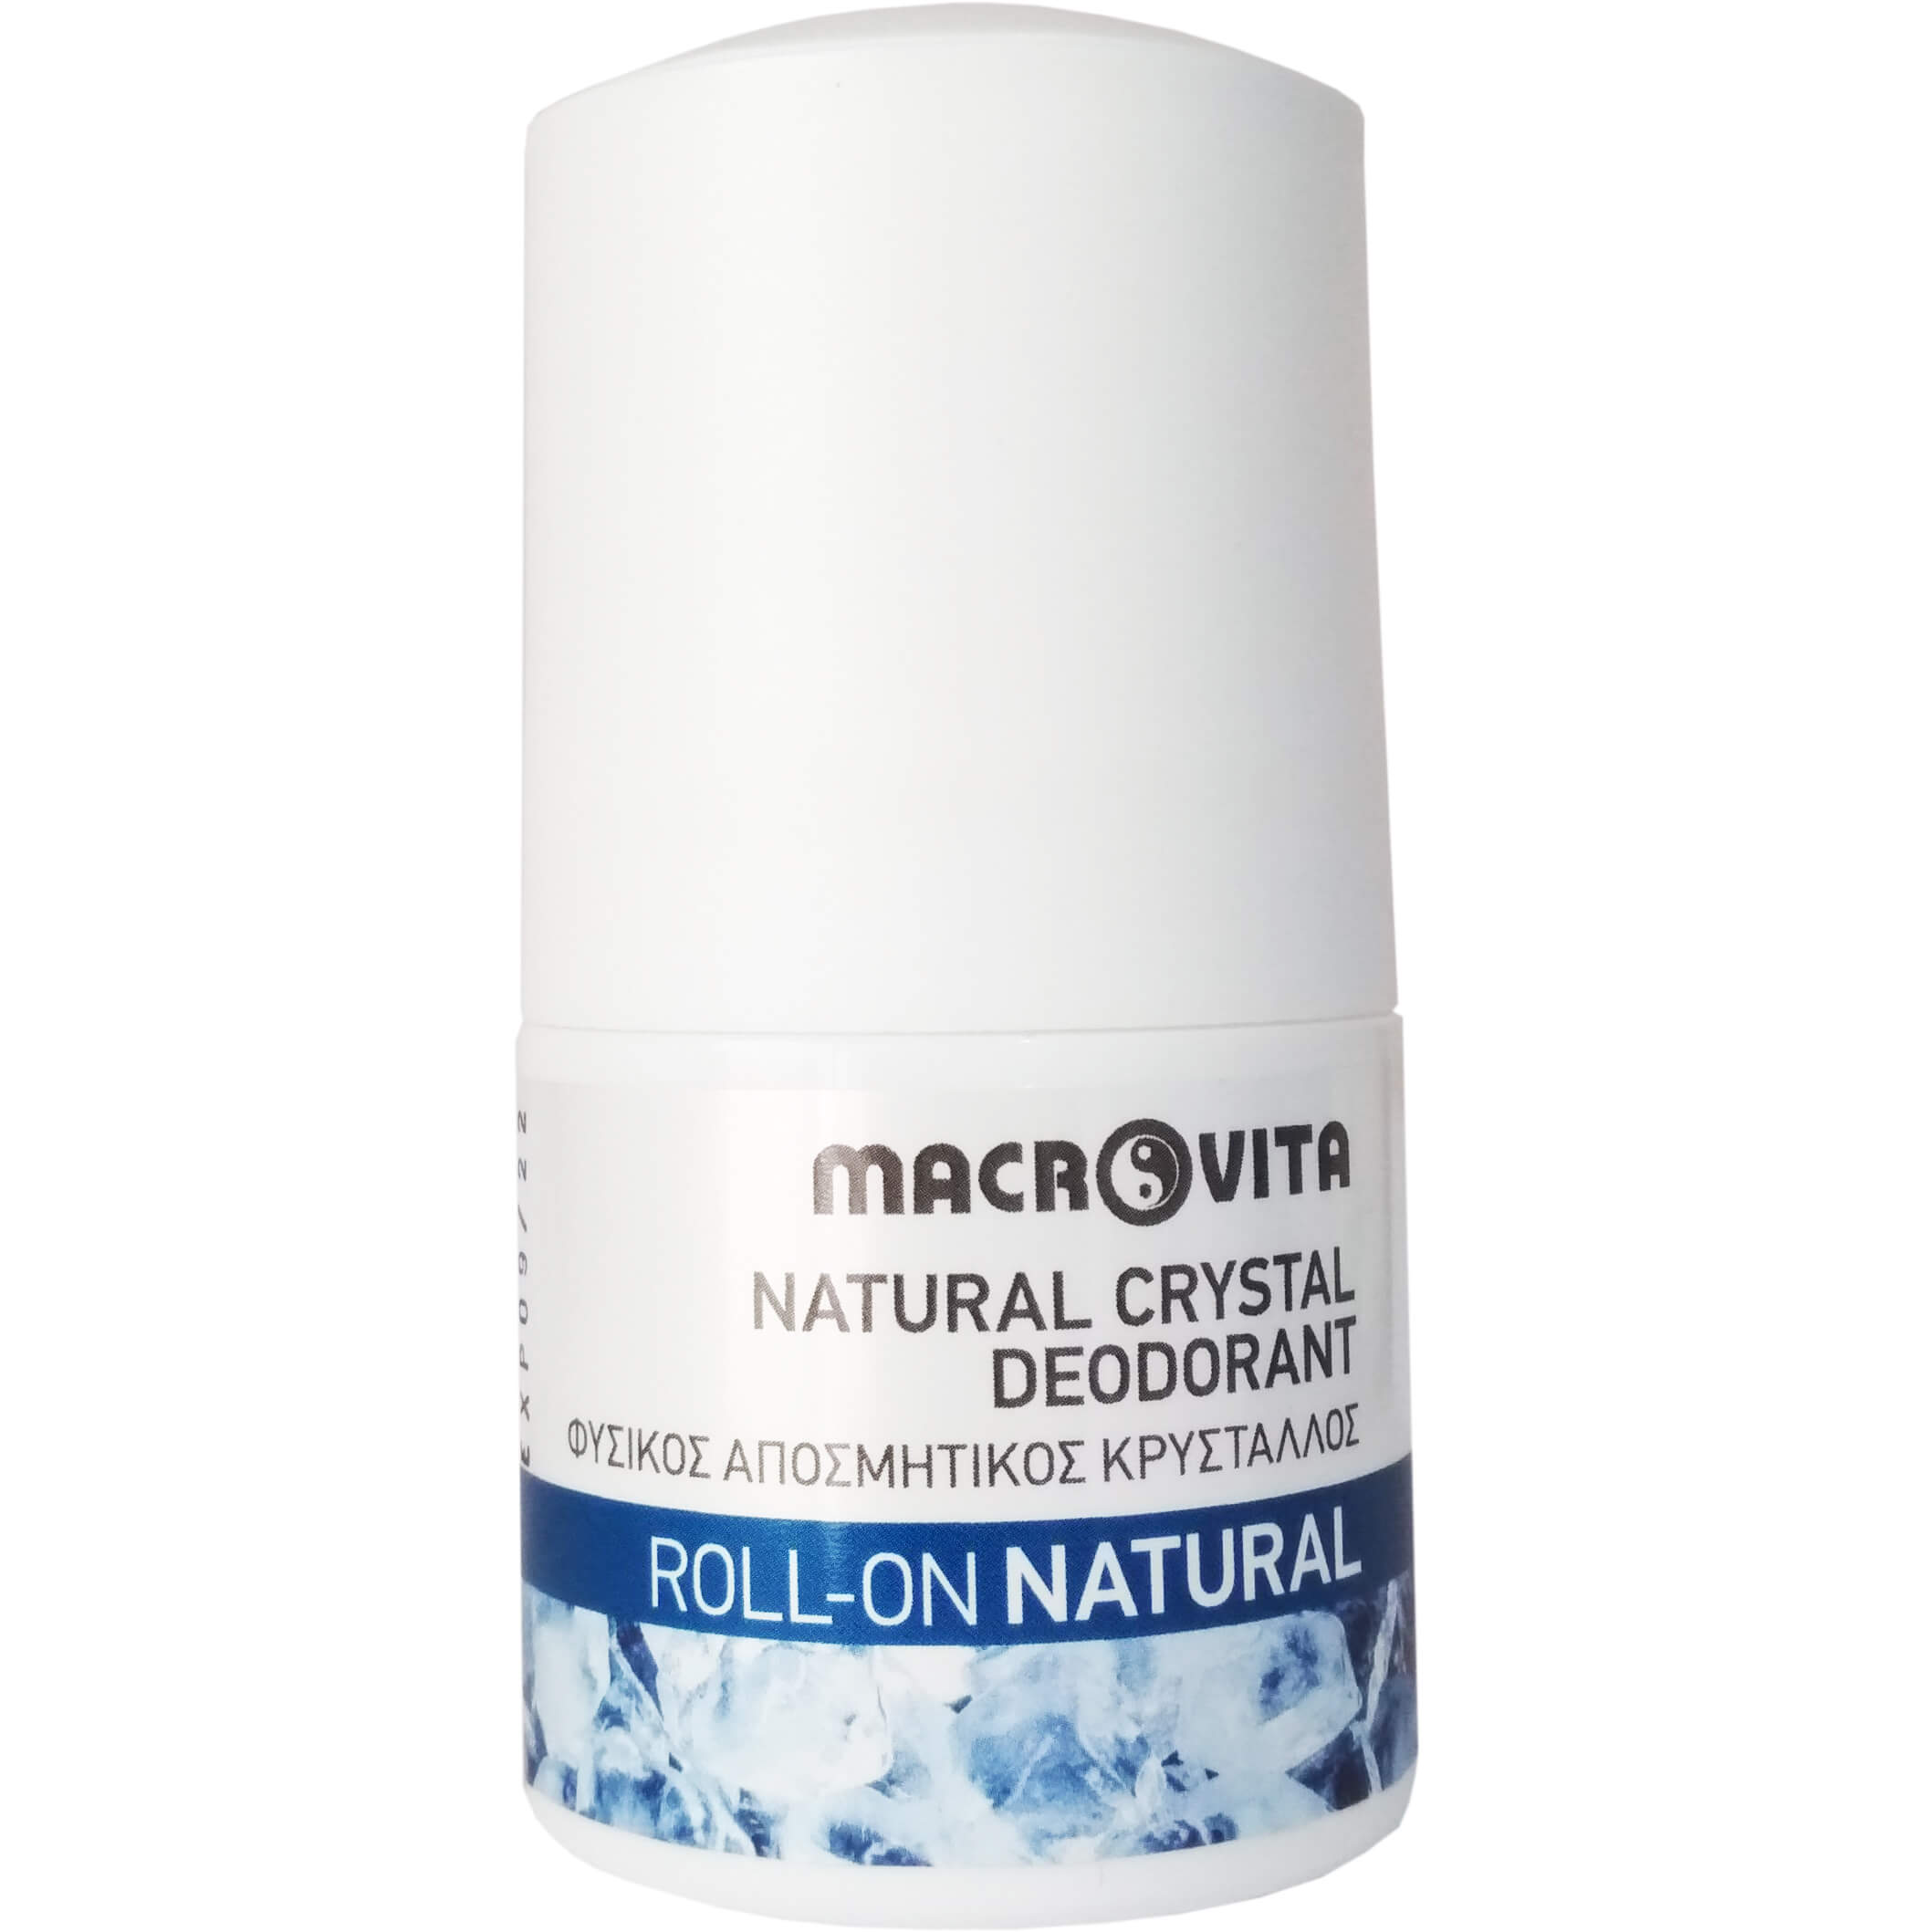 Macrovita Natural Crystal Deodorant Φυσικός Αποσμητικός Κρύσταλλος Roll-On Άρωμα Natural 50ml